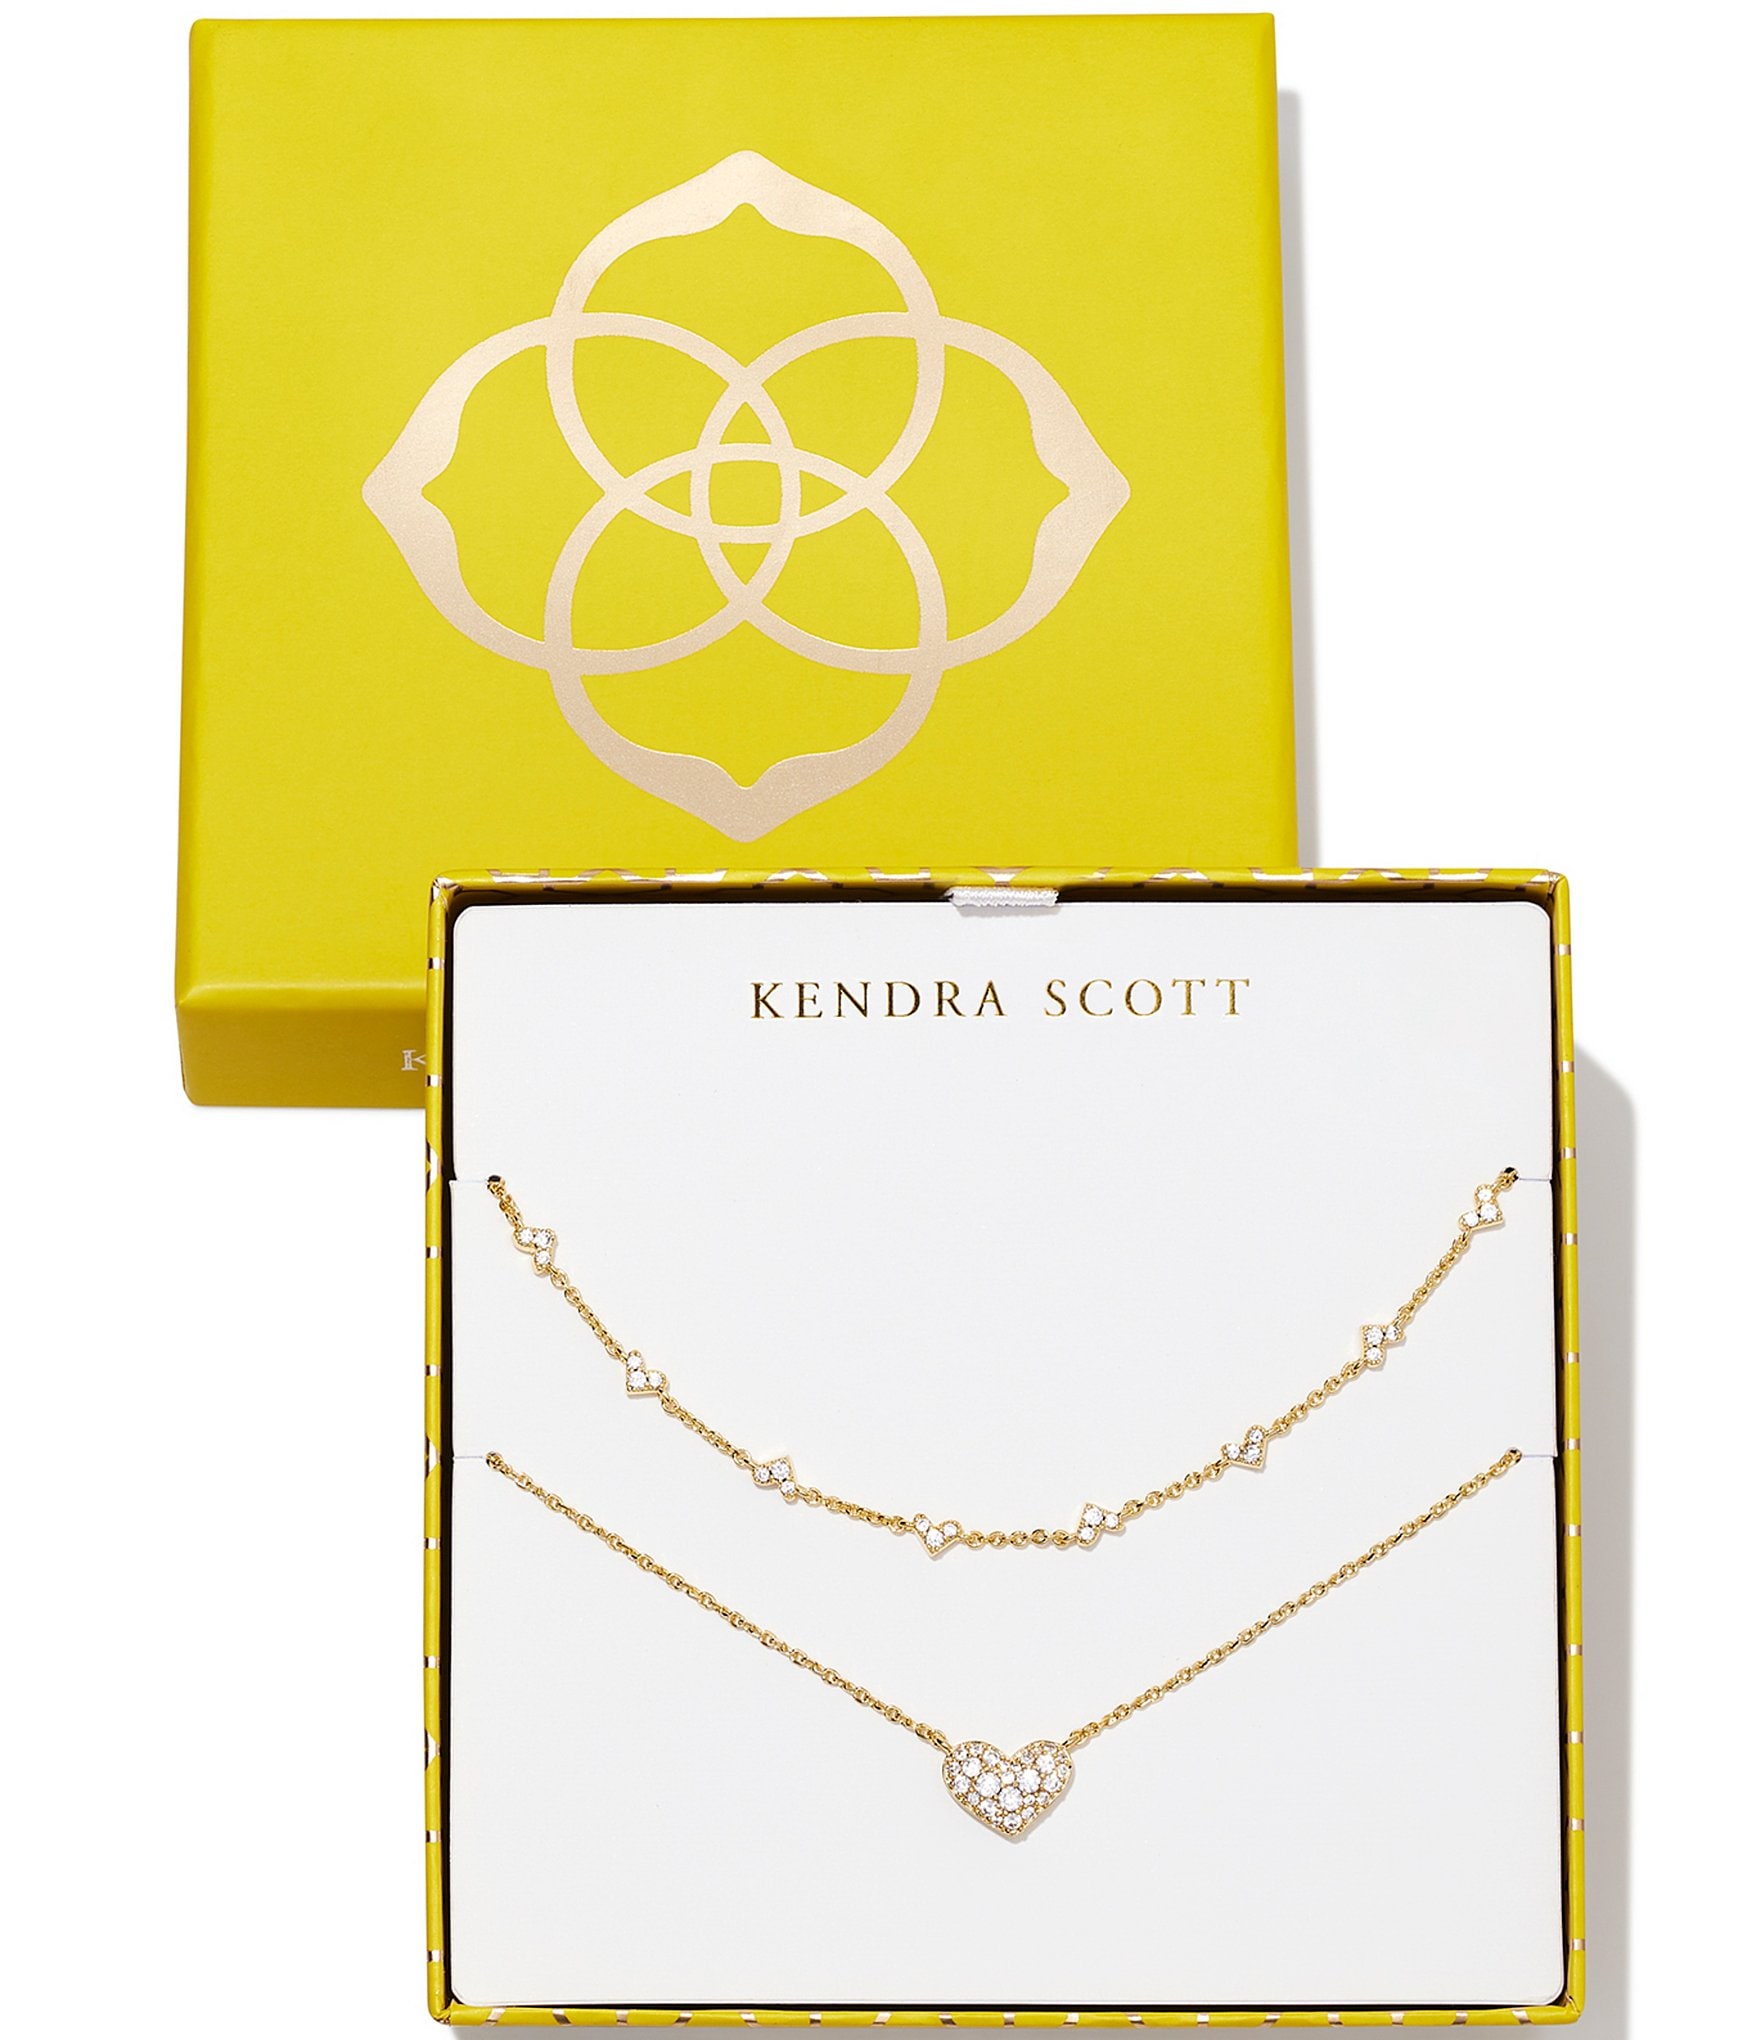 Kendra Scott Heart Necklace